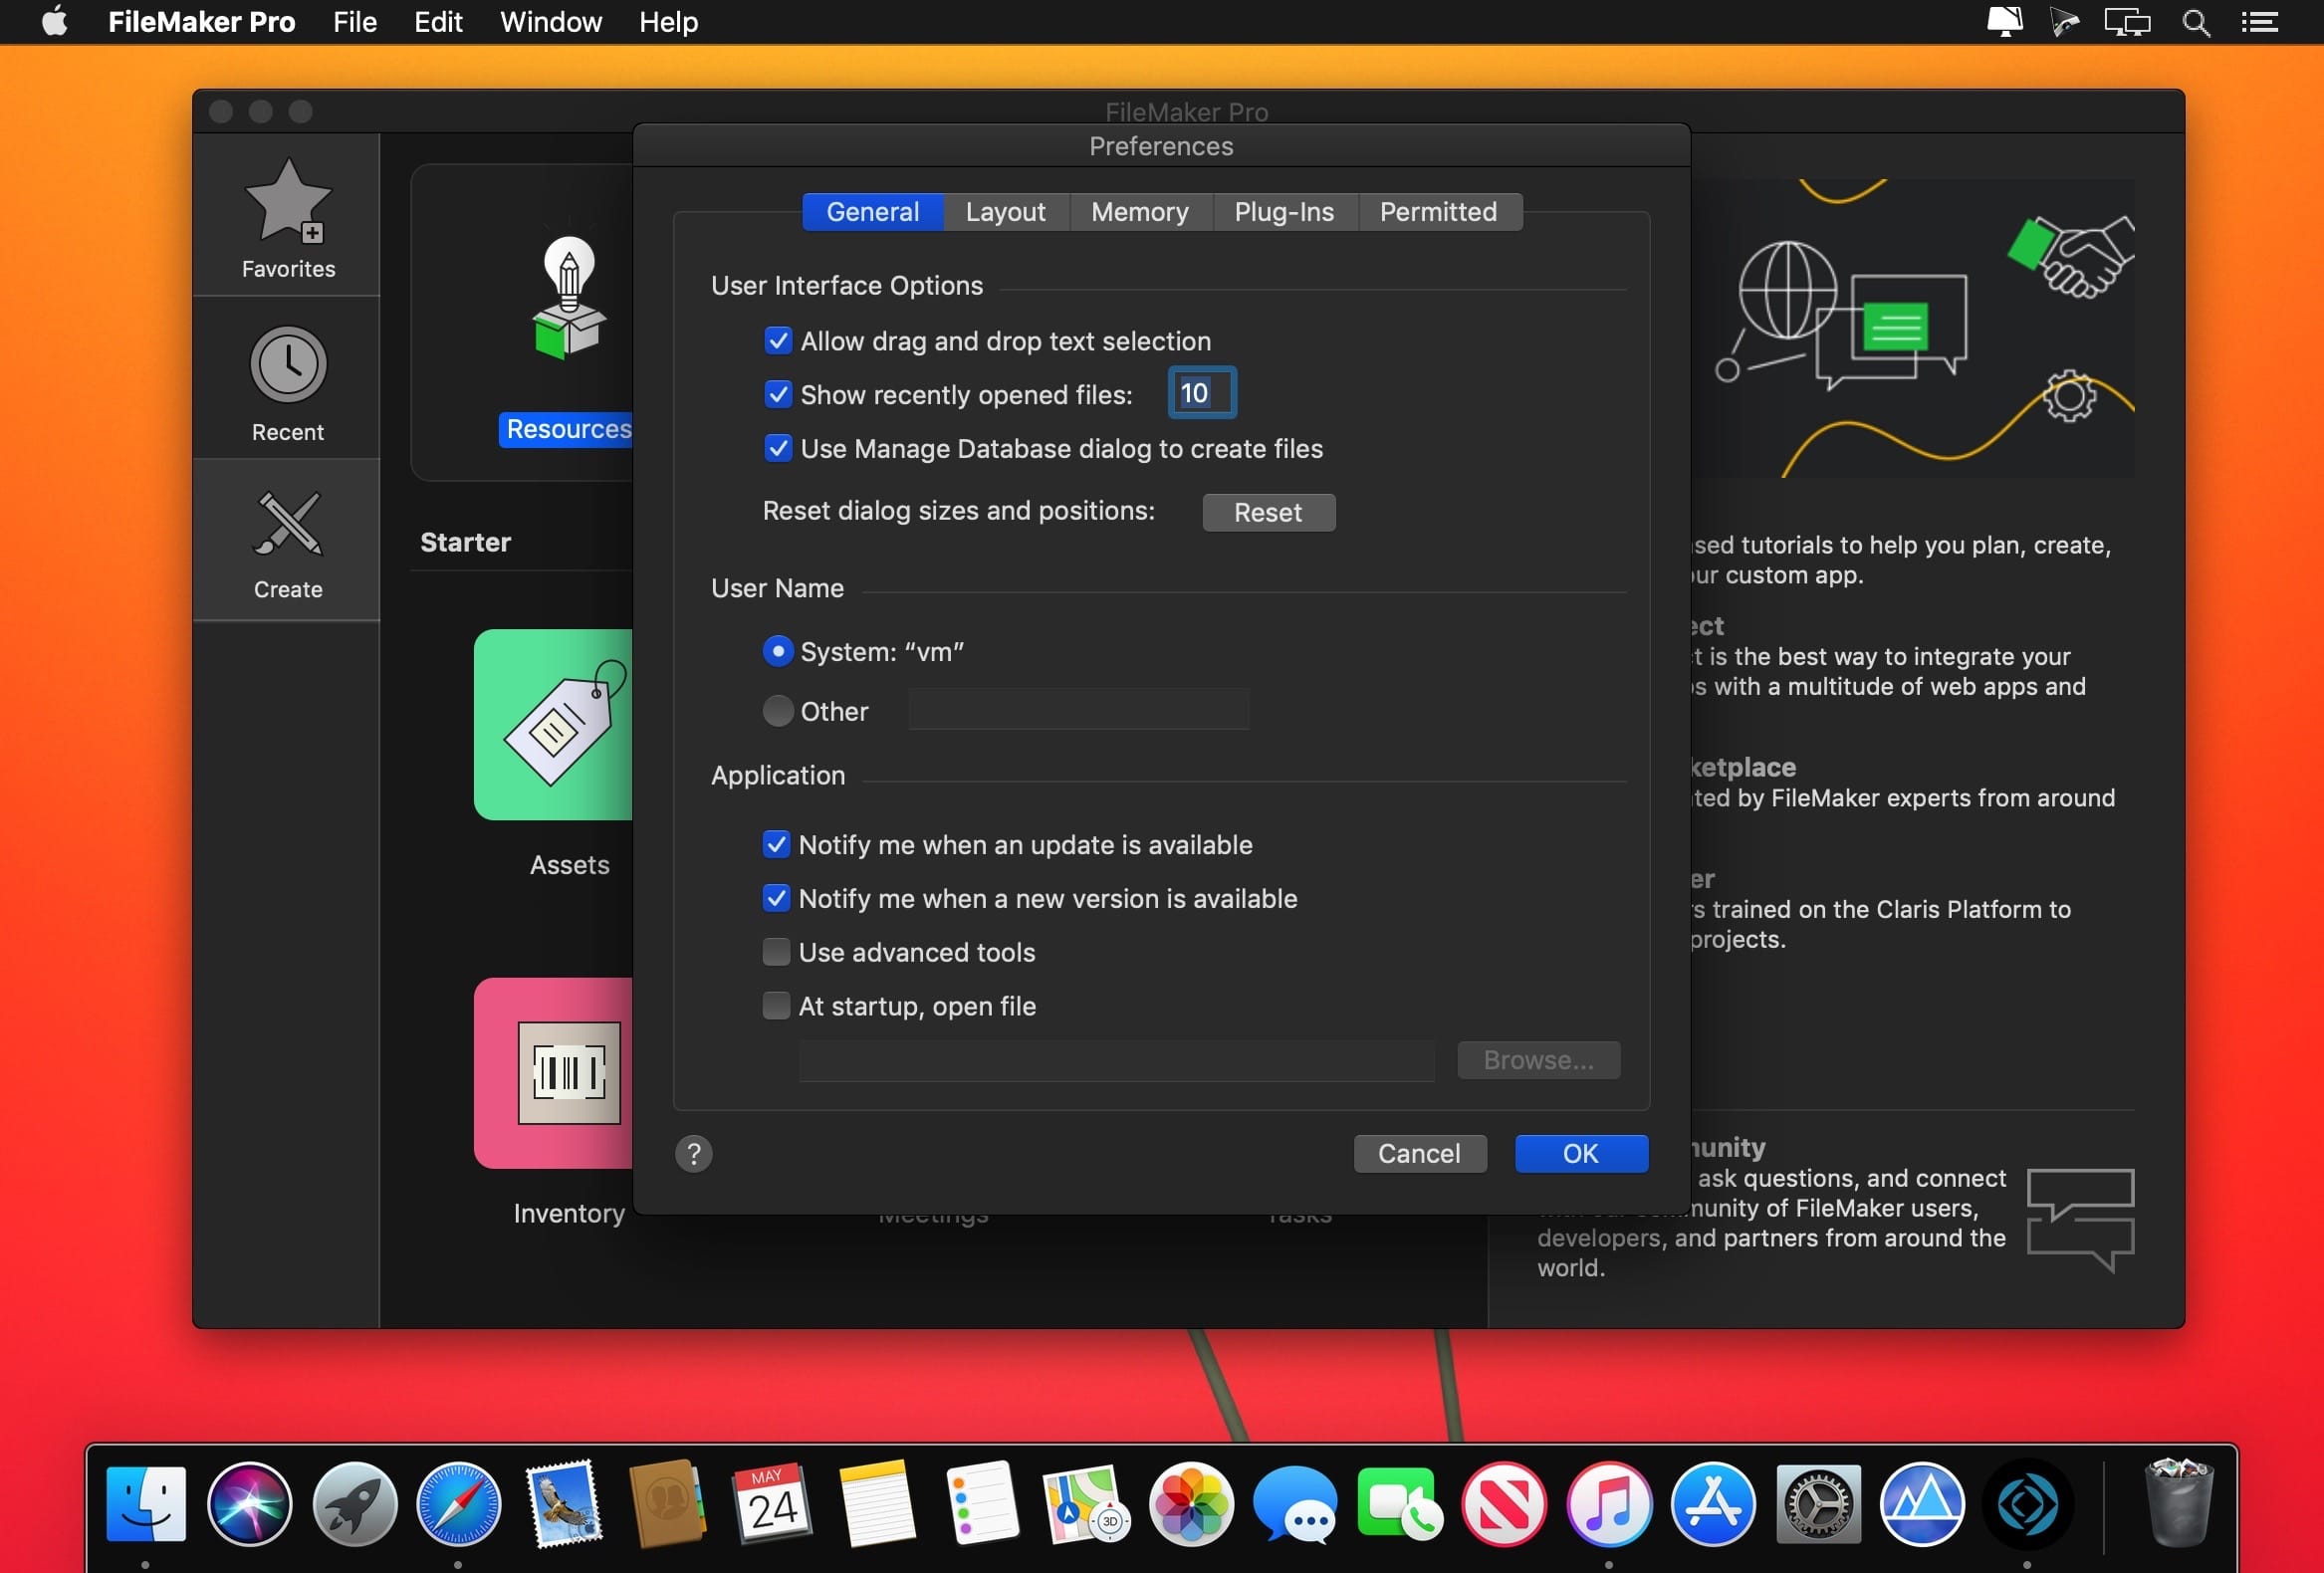 filemaker pro 16 download windows